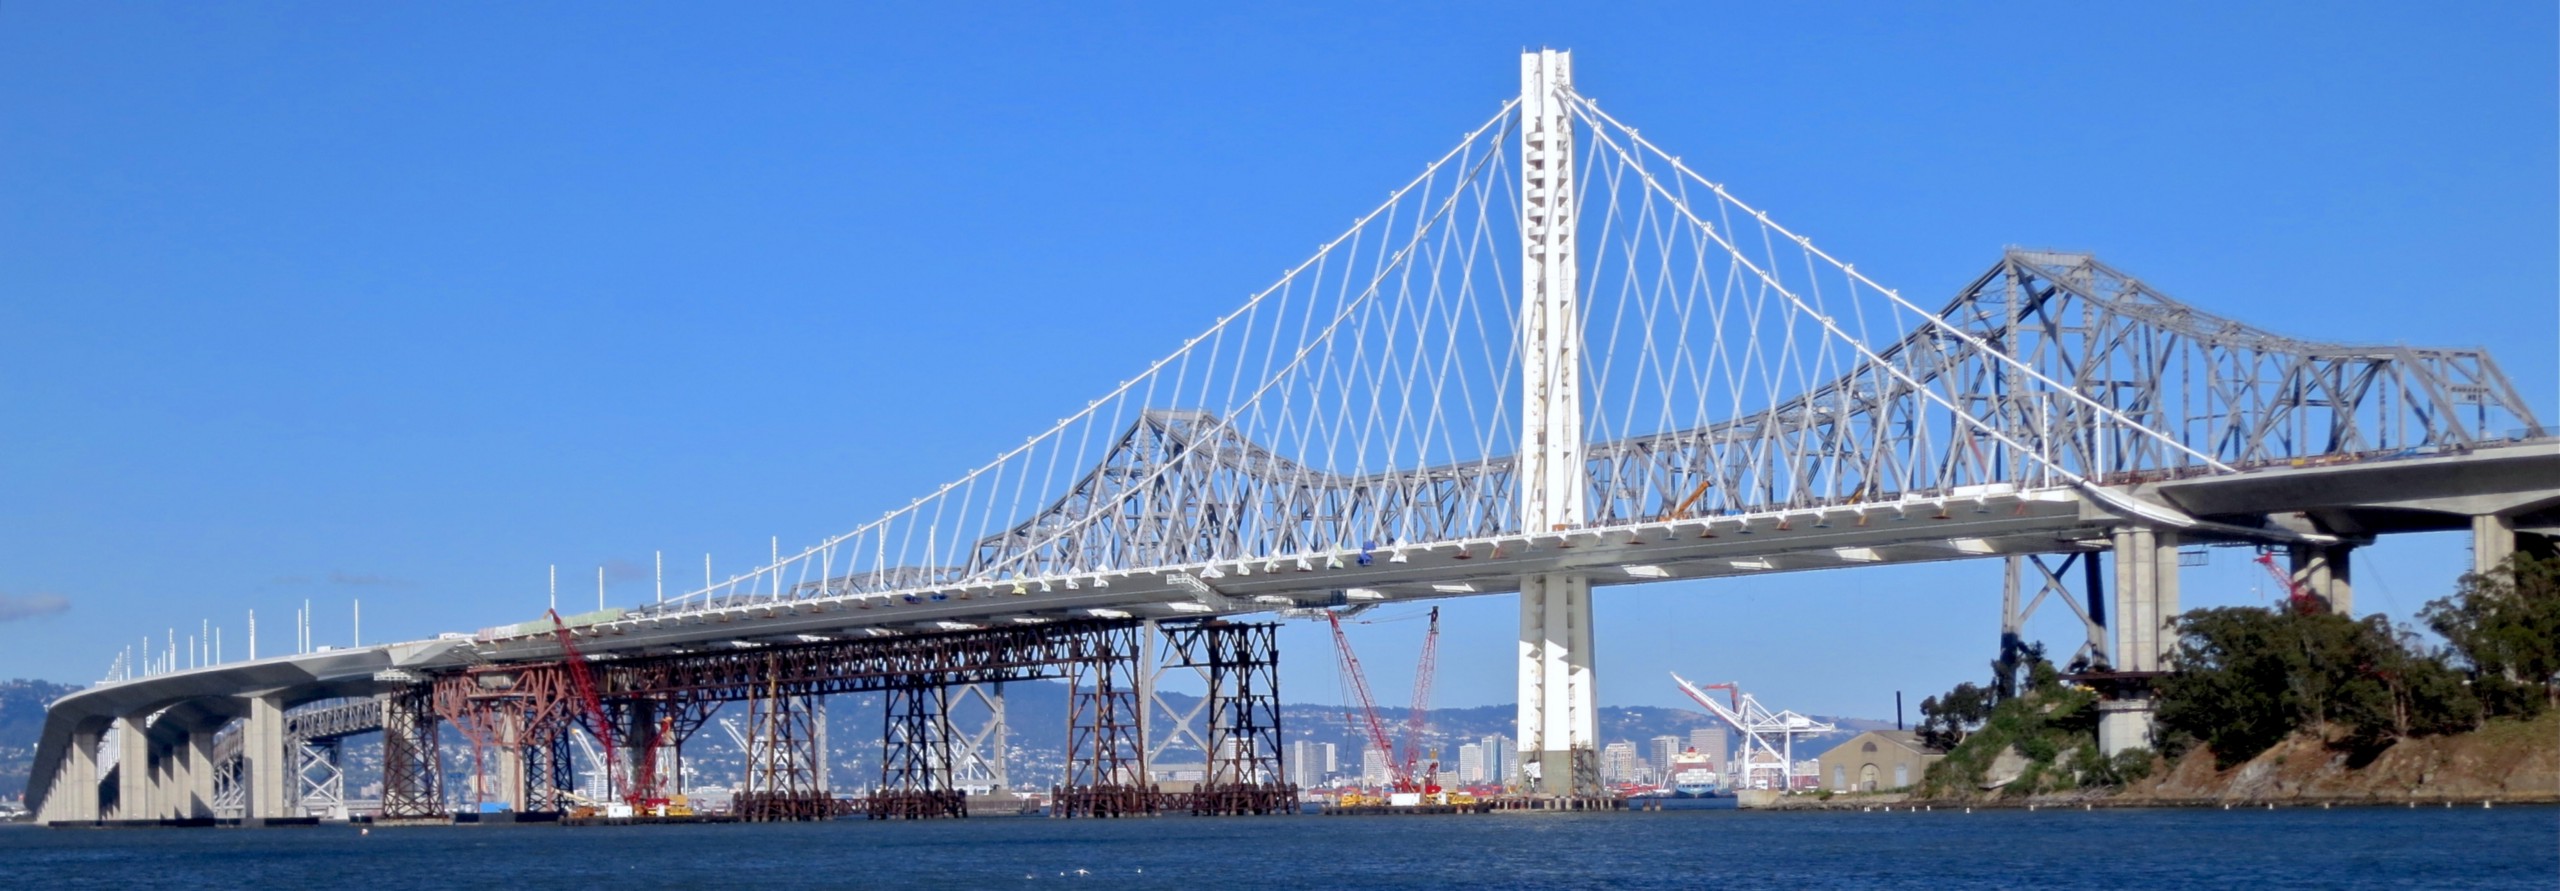 The new Oakland Bay Bridge